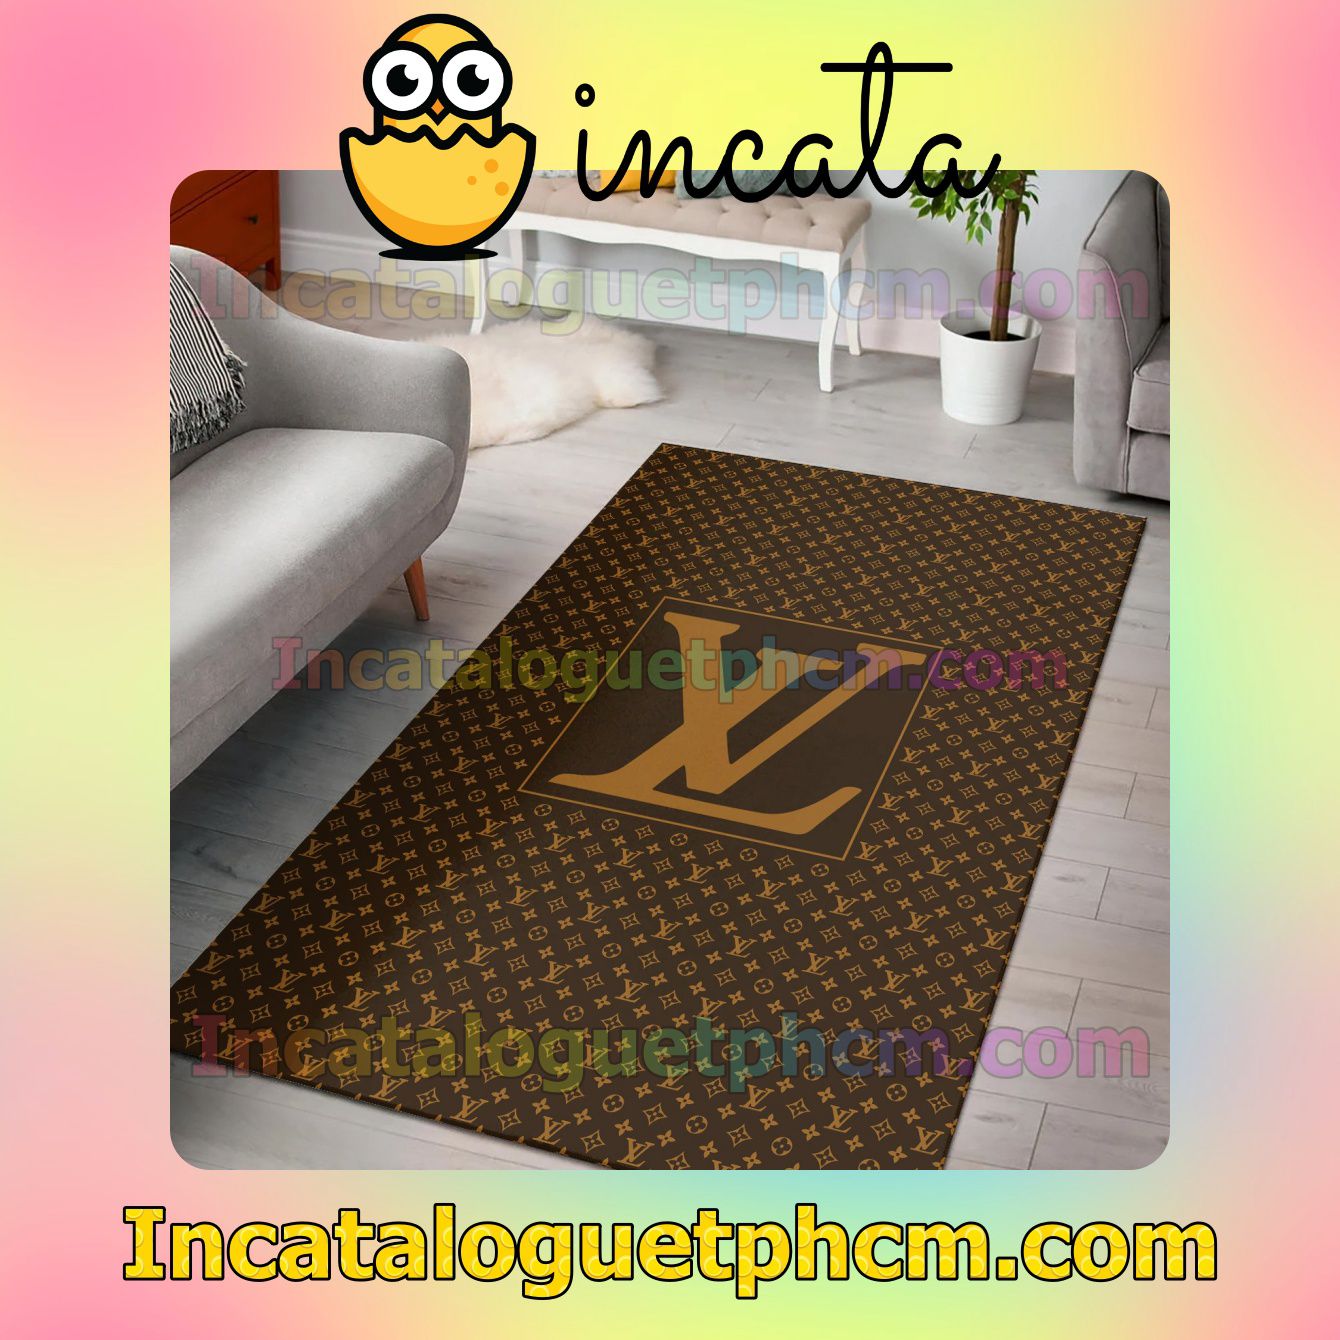 Louis Vuitton Dark Brown Monogram With Big Logo In Square Center Carpet Rugs For Kitchen